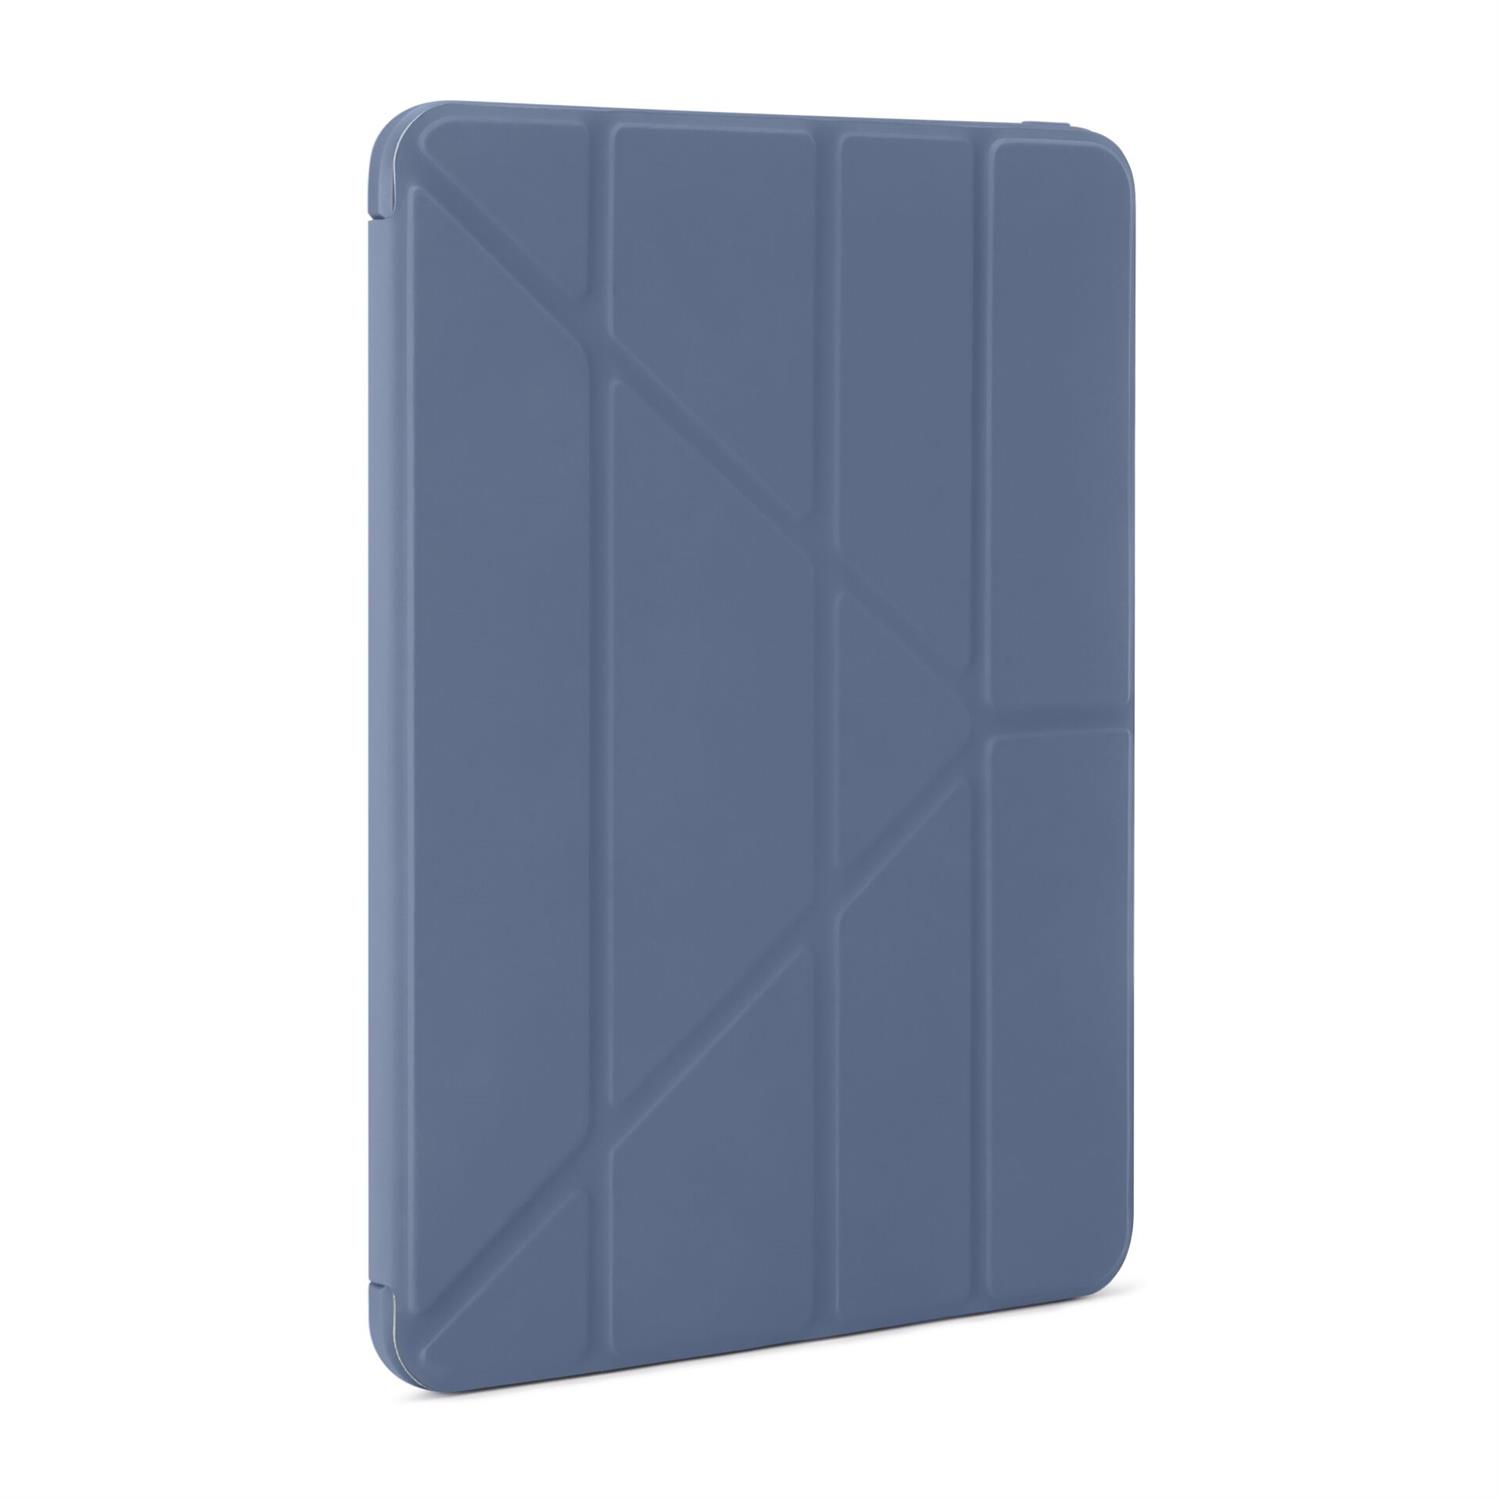 Pipetto Origami No1 OriginalCase für iPad Pro 11 (4th Gen) in Navy